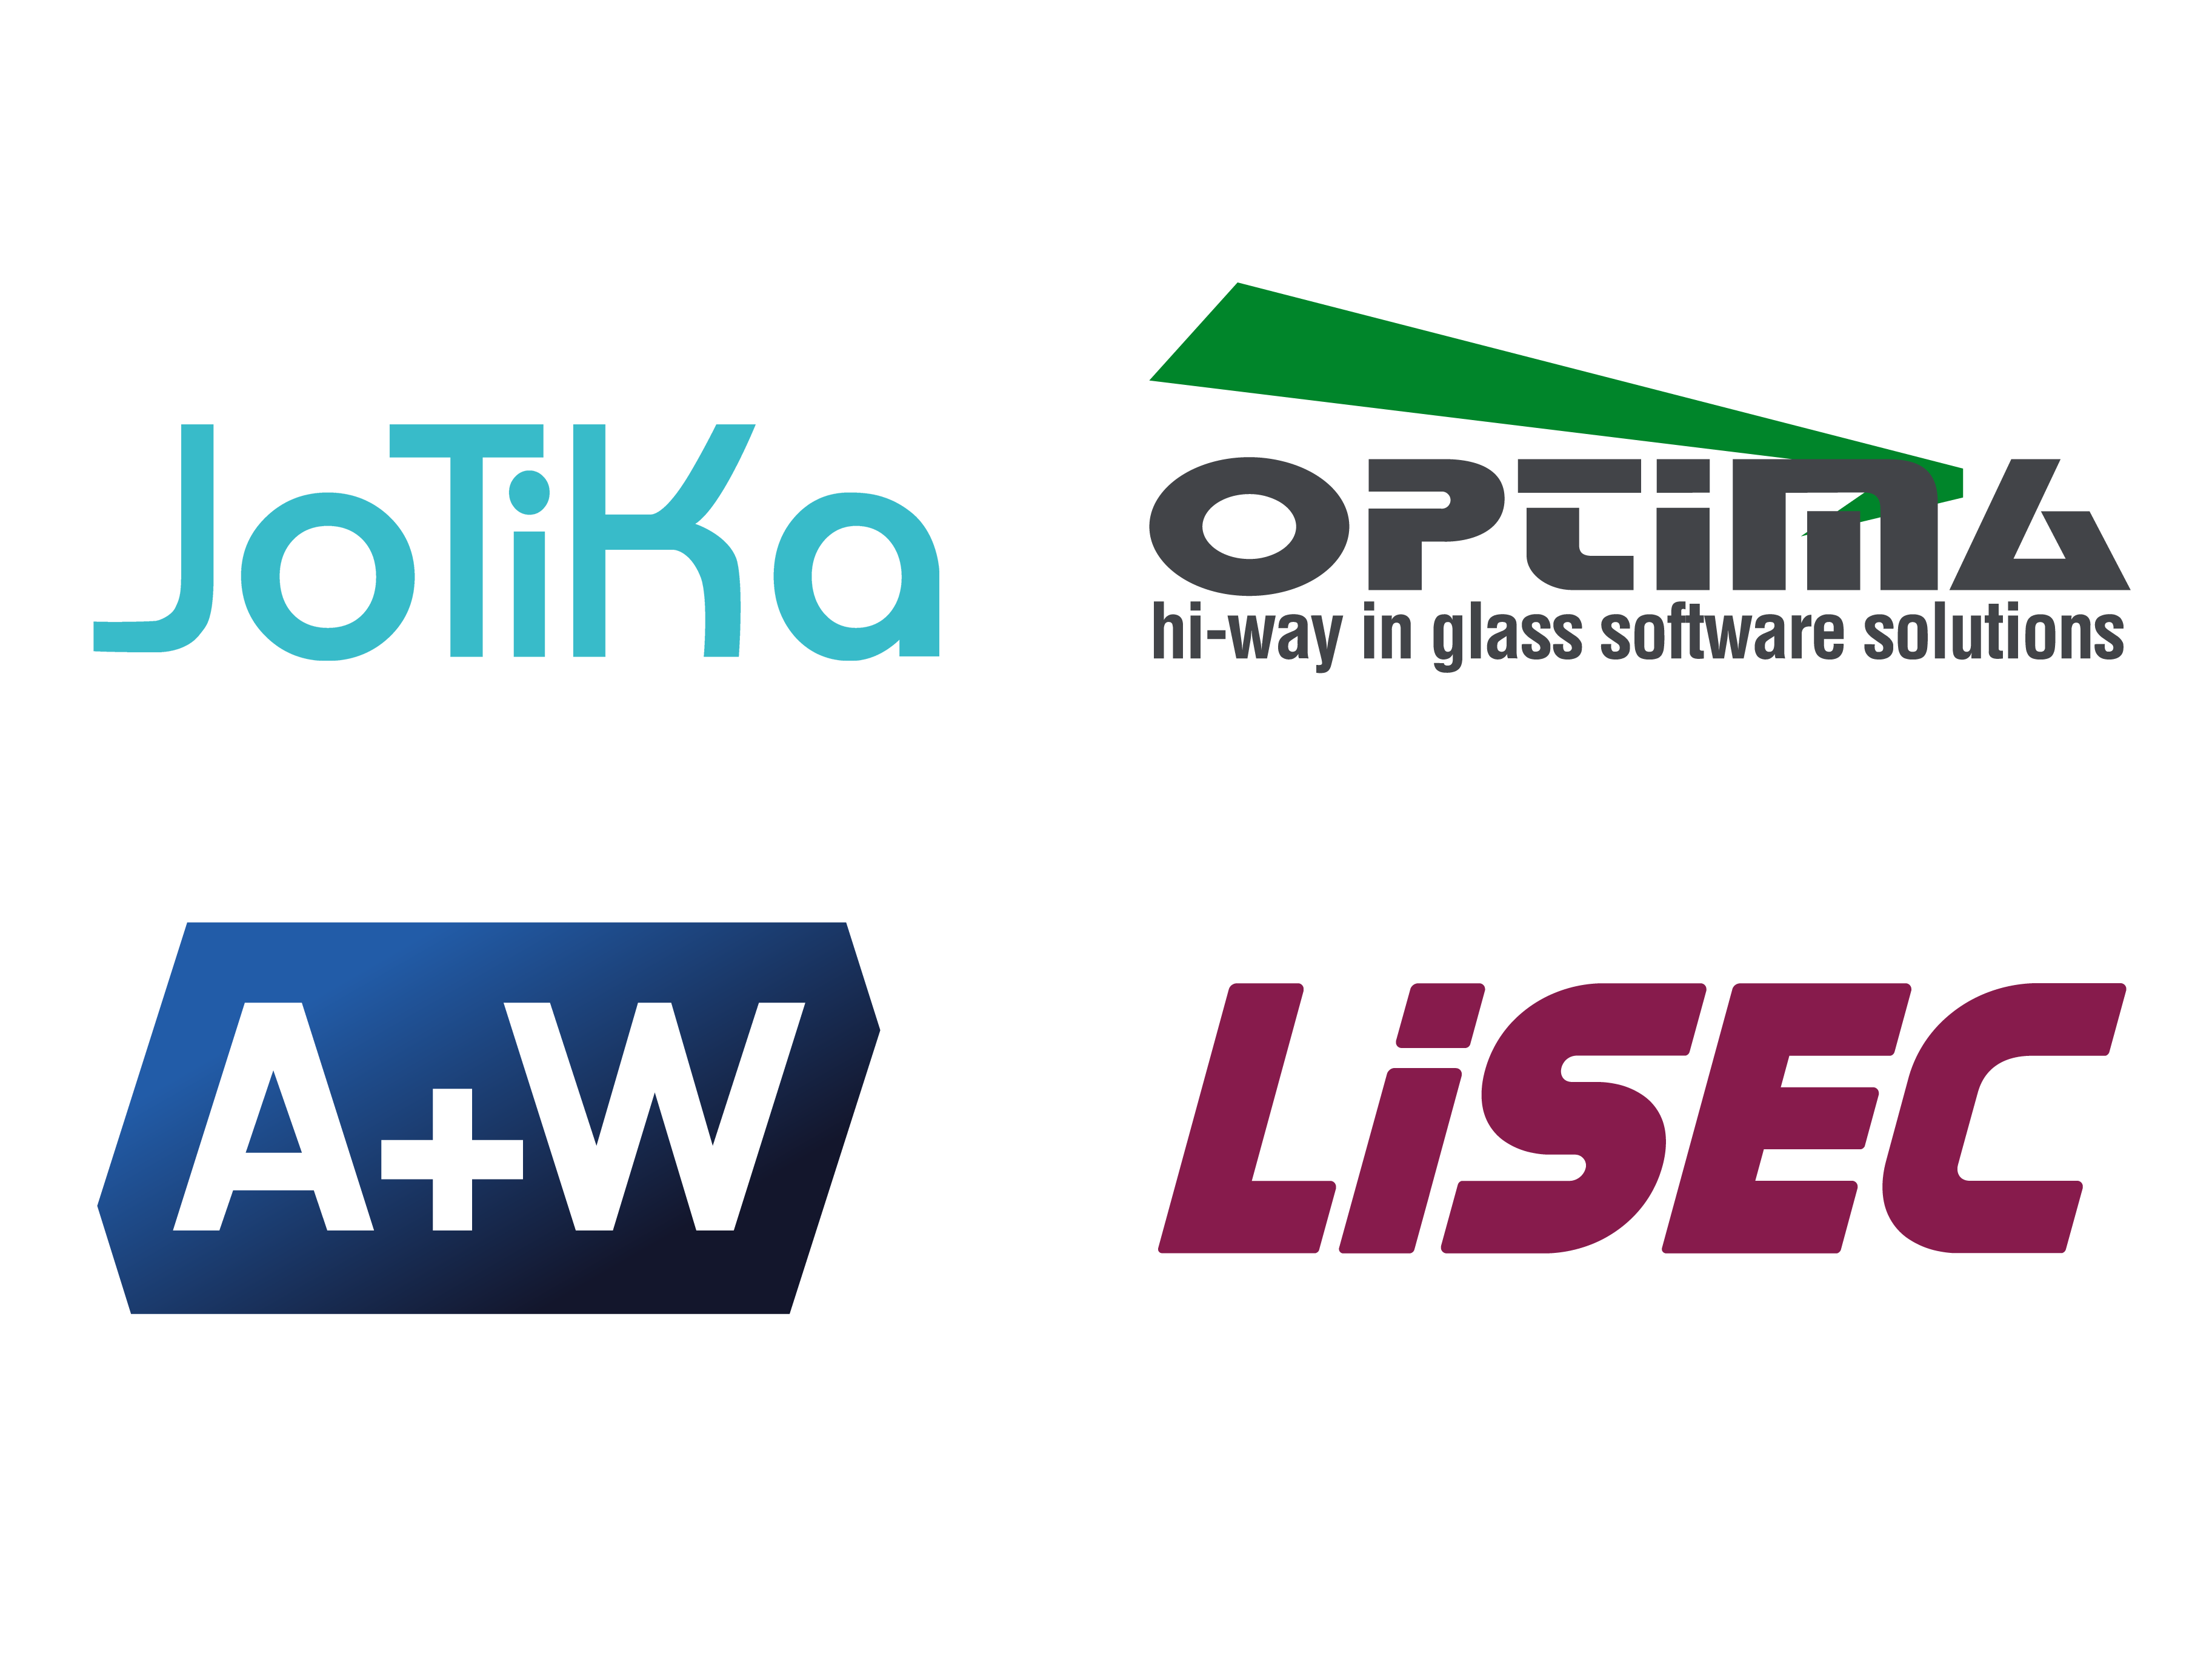 Production integration options - Jotika, Optima, A+W, Lisec